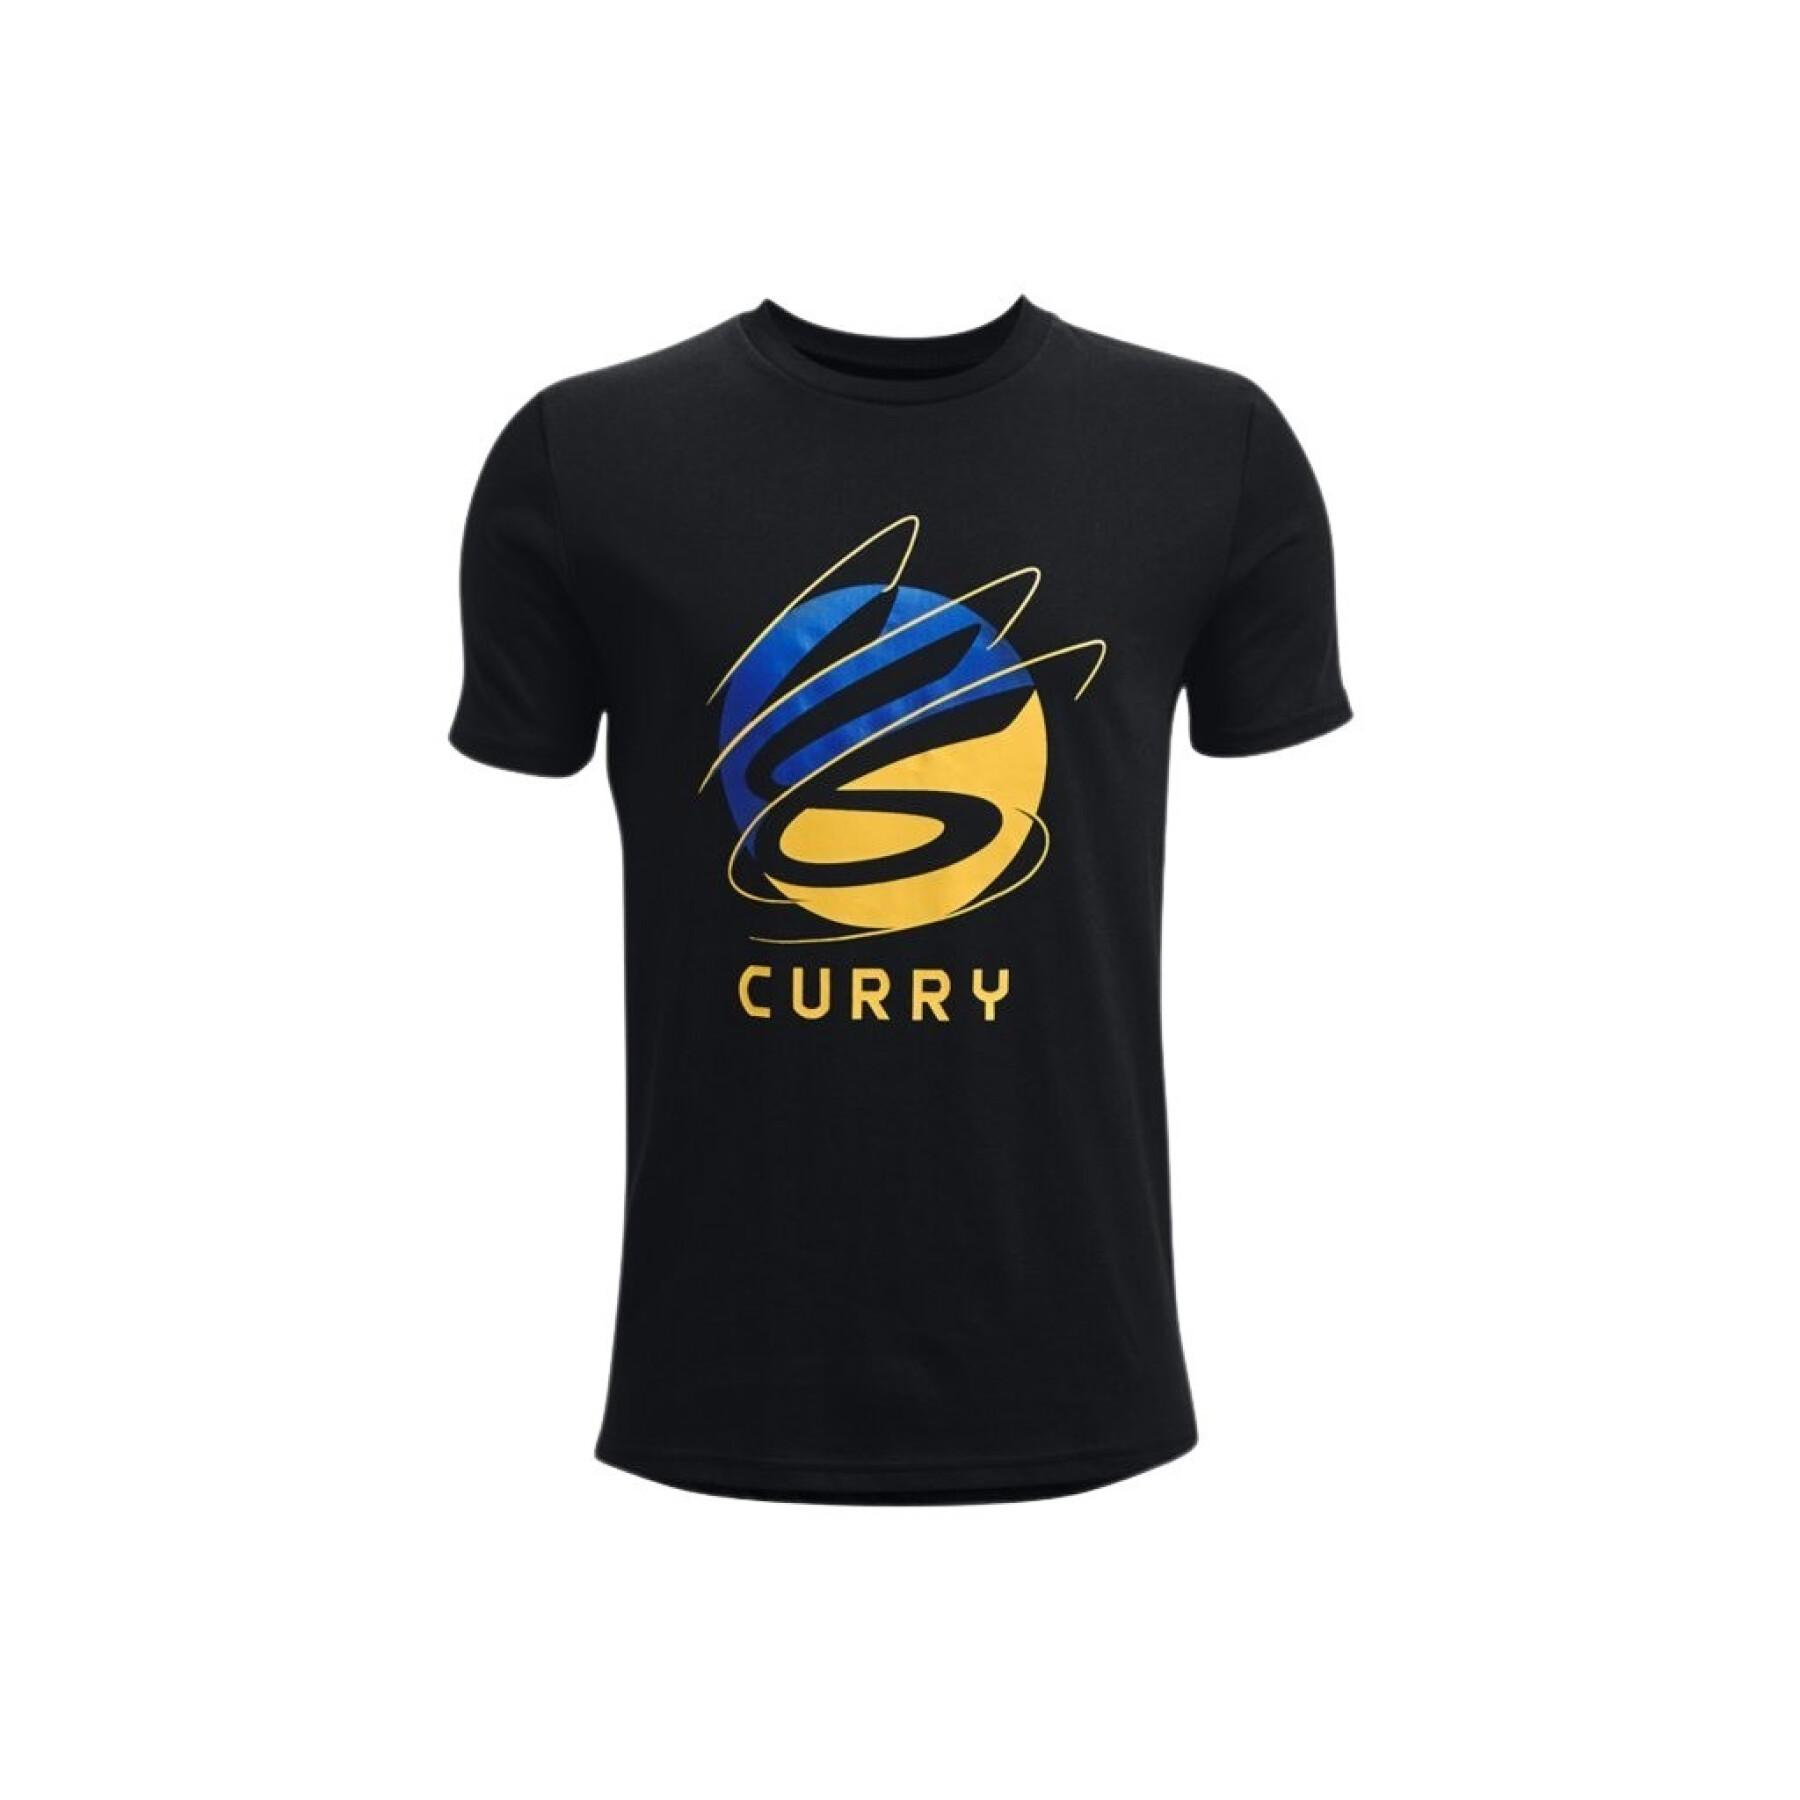 Koszulka chłopięca Under Armour UA Curry symbol